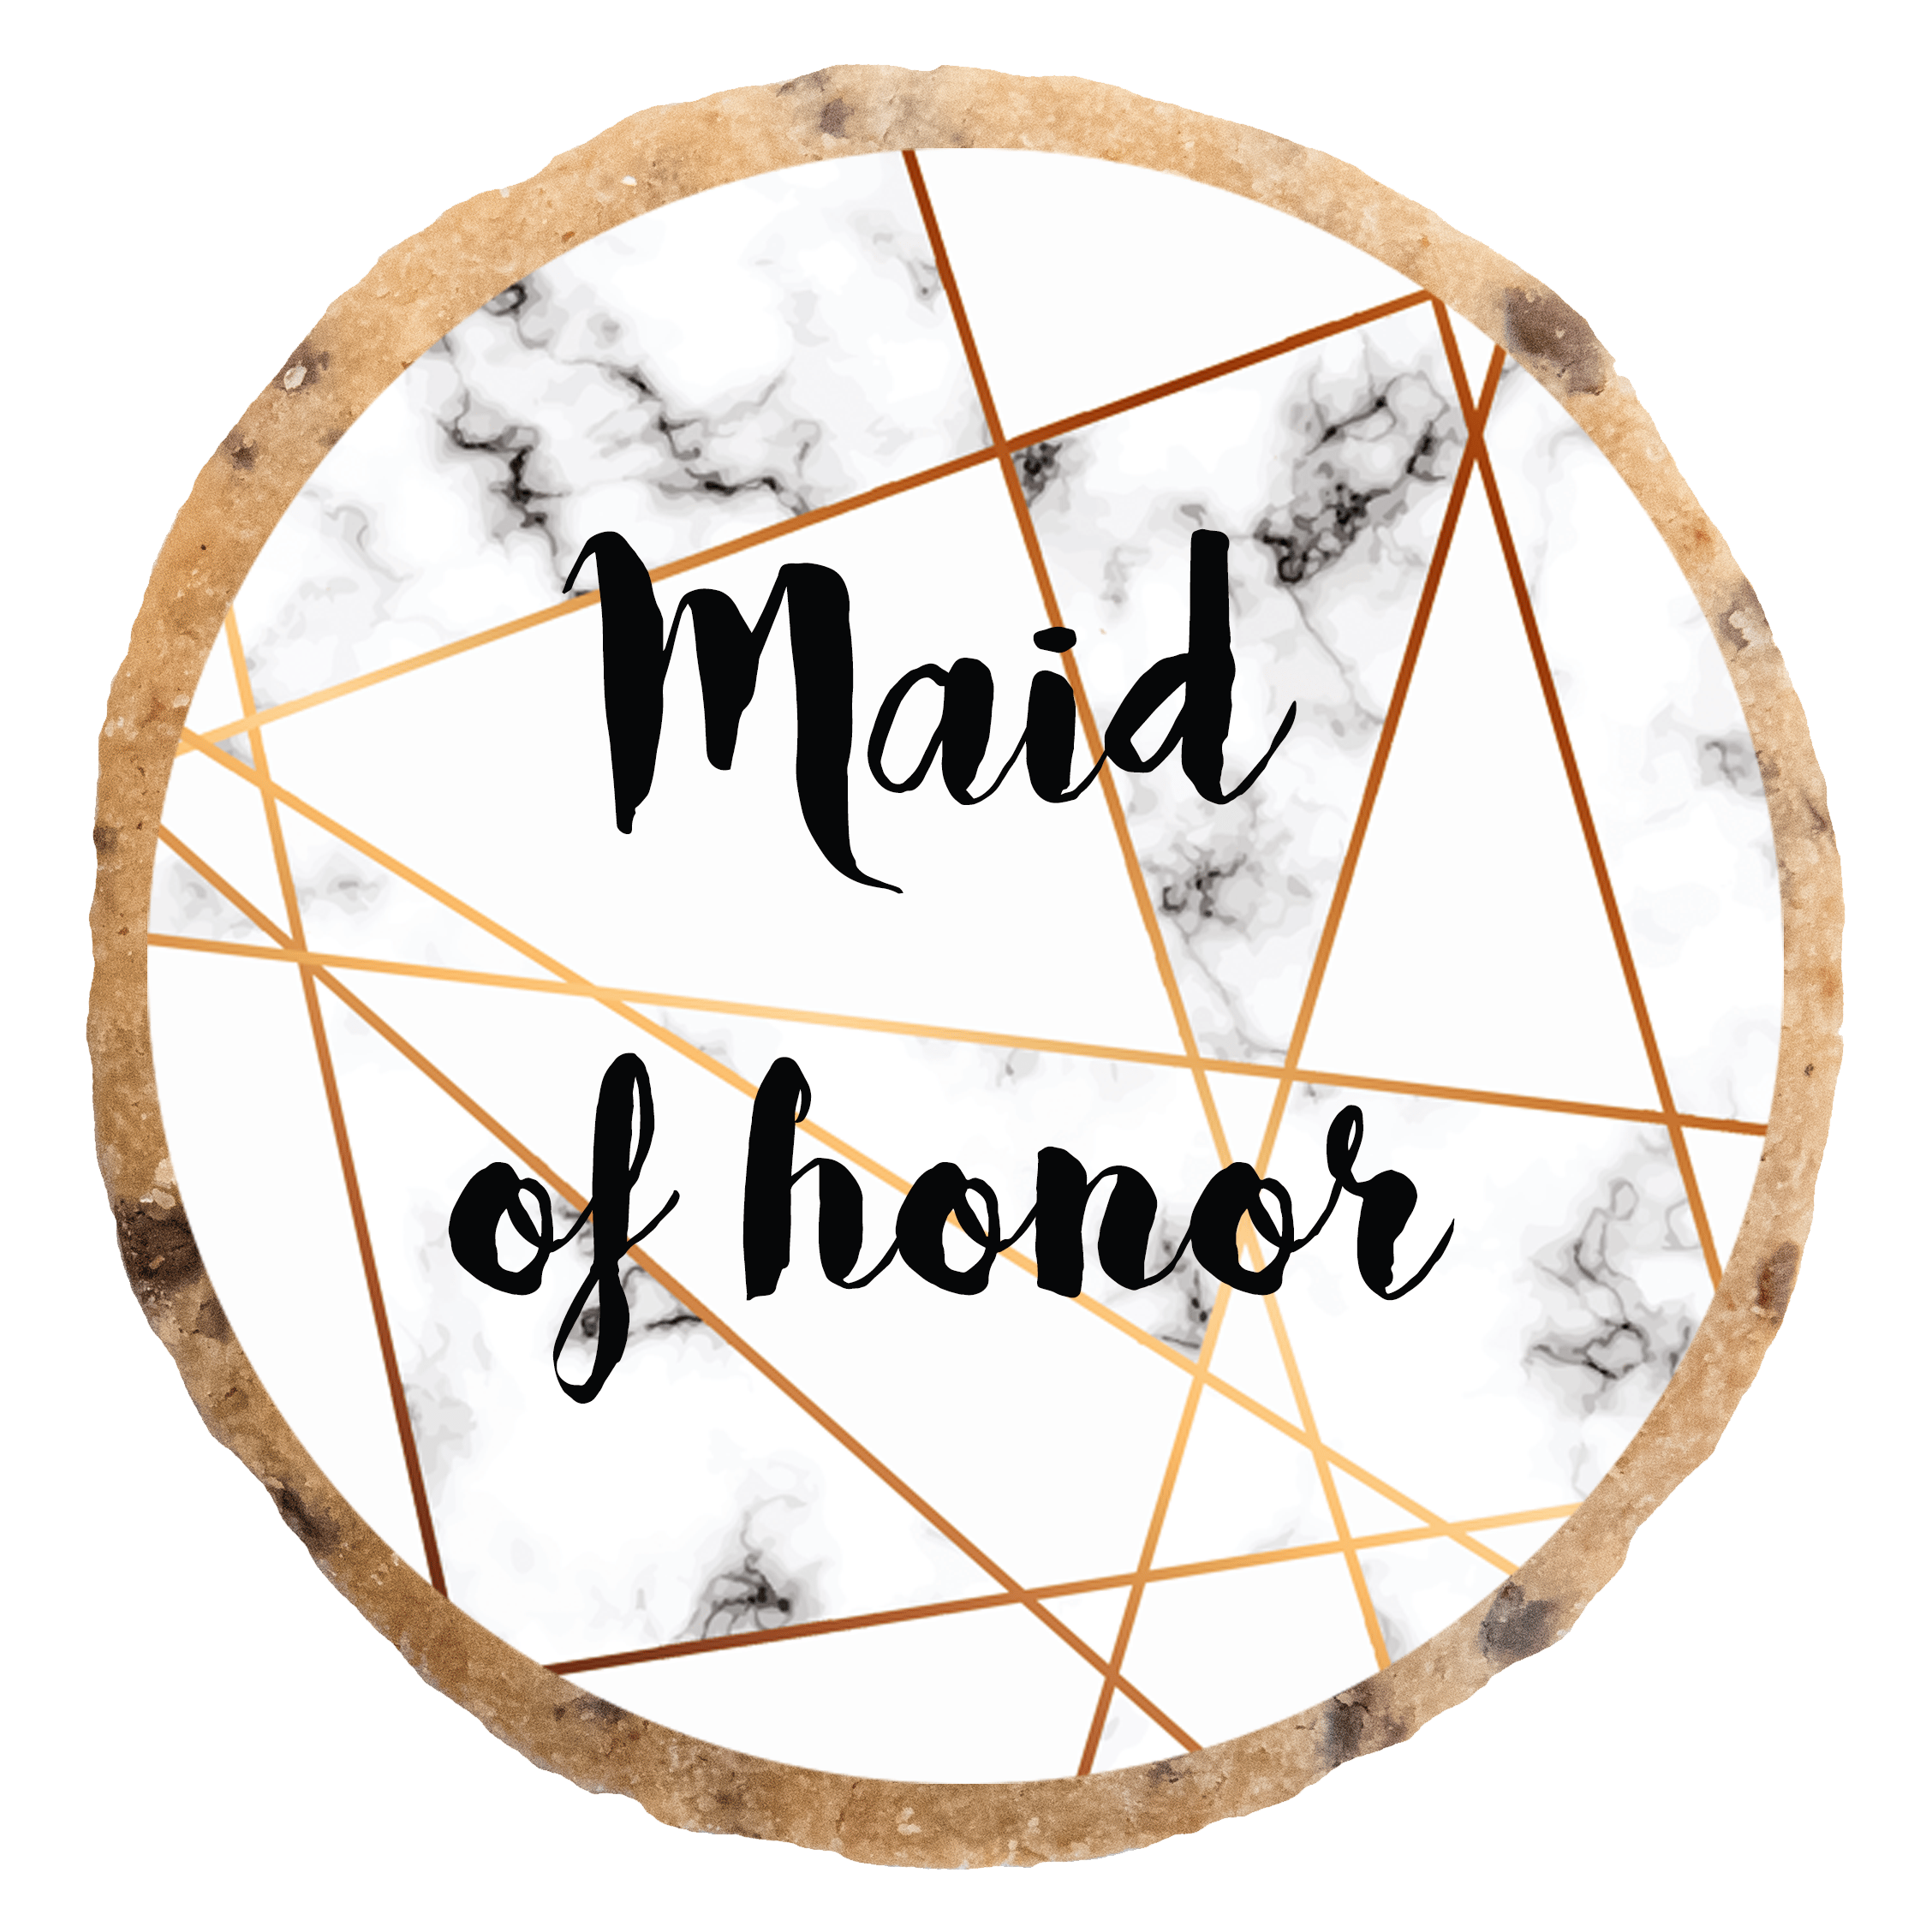 "Maid of Honor" MotivKEKS